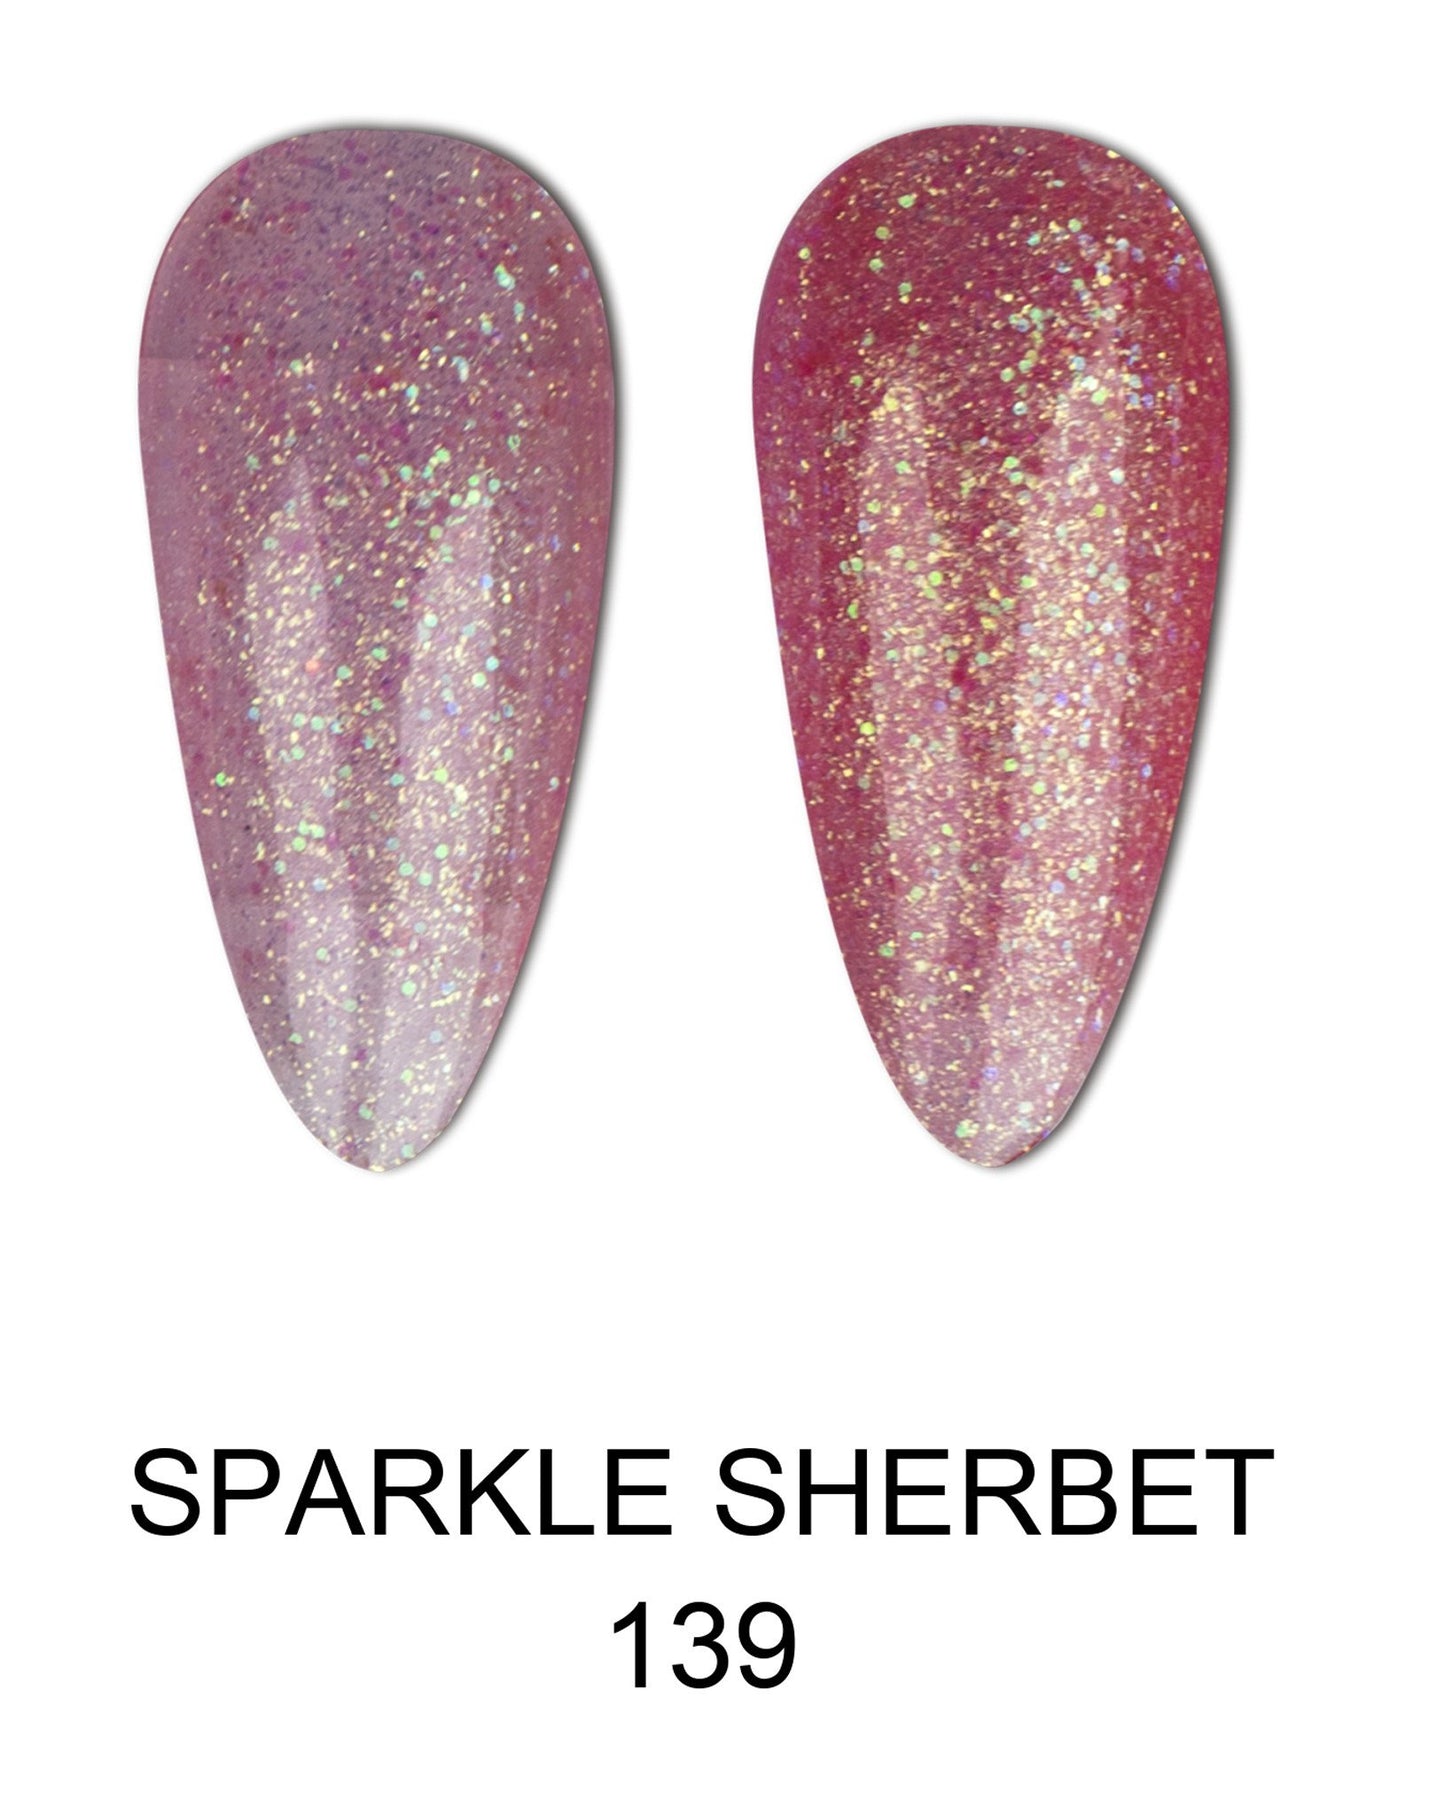 Claw Culture 139 Summer Sparkle Sherbet Limited Edition Gel Polish